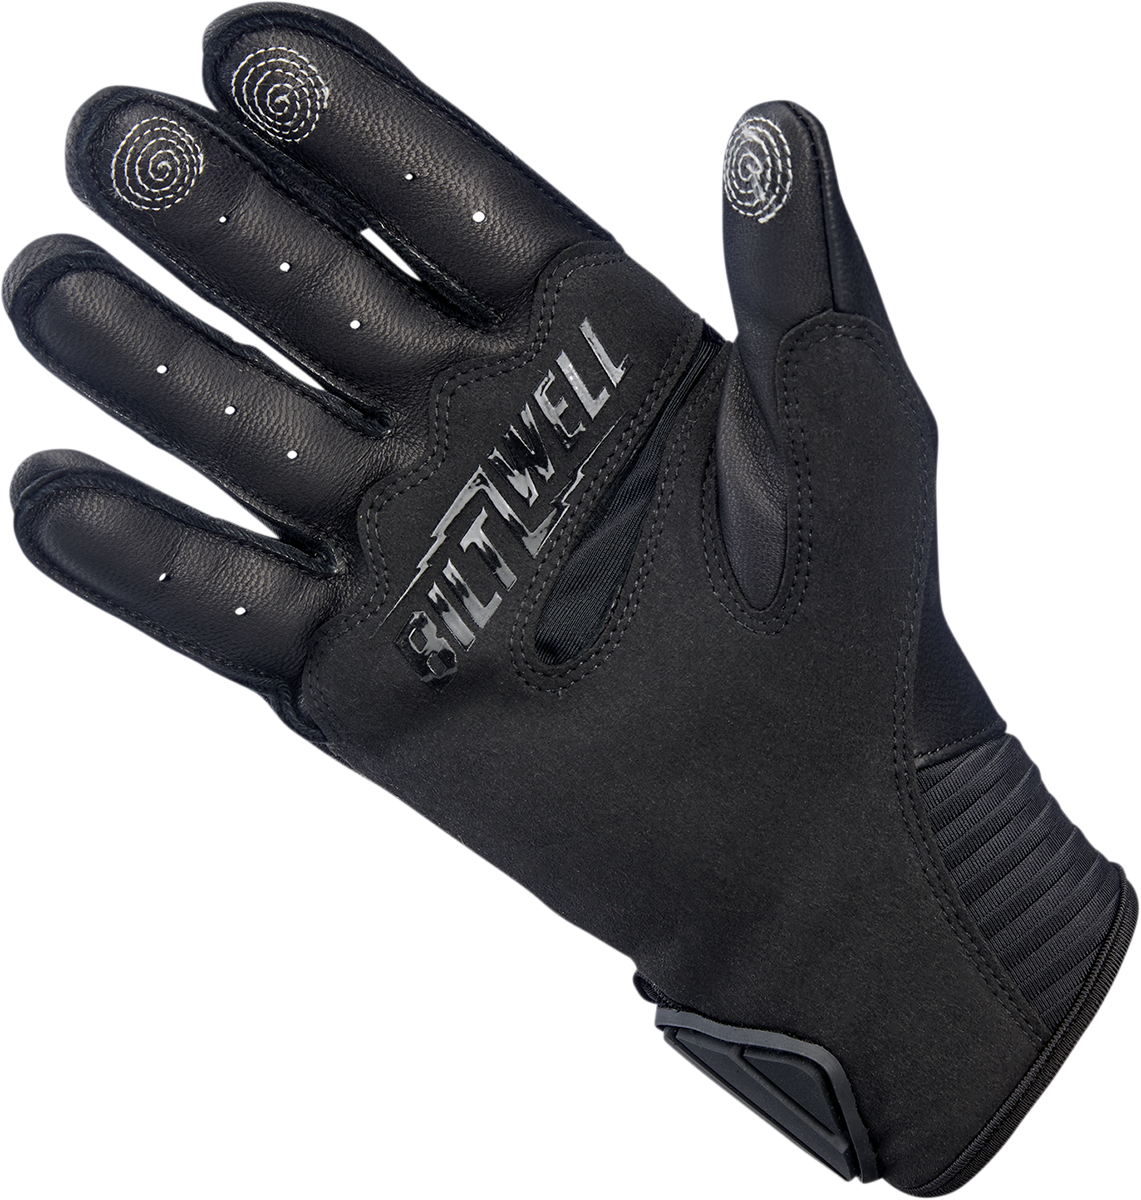 BILTWELL Bridgeport Gloves - Black Out - XS 1509-0101-301